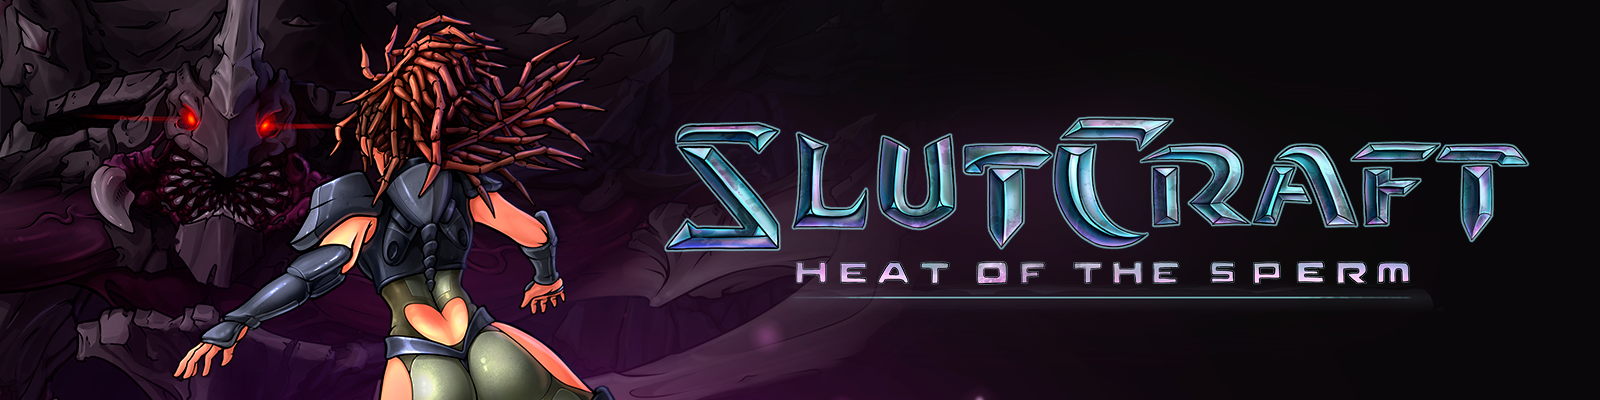 SlutCraft: Heat of the sperm